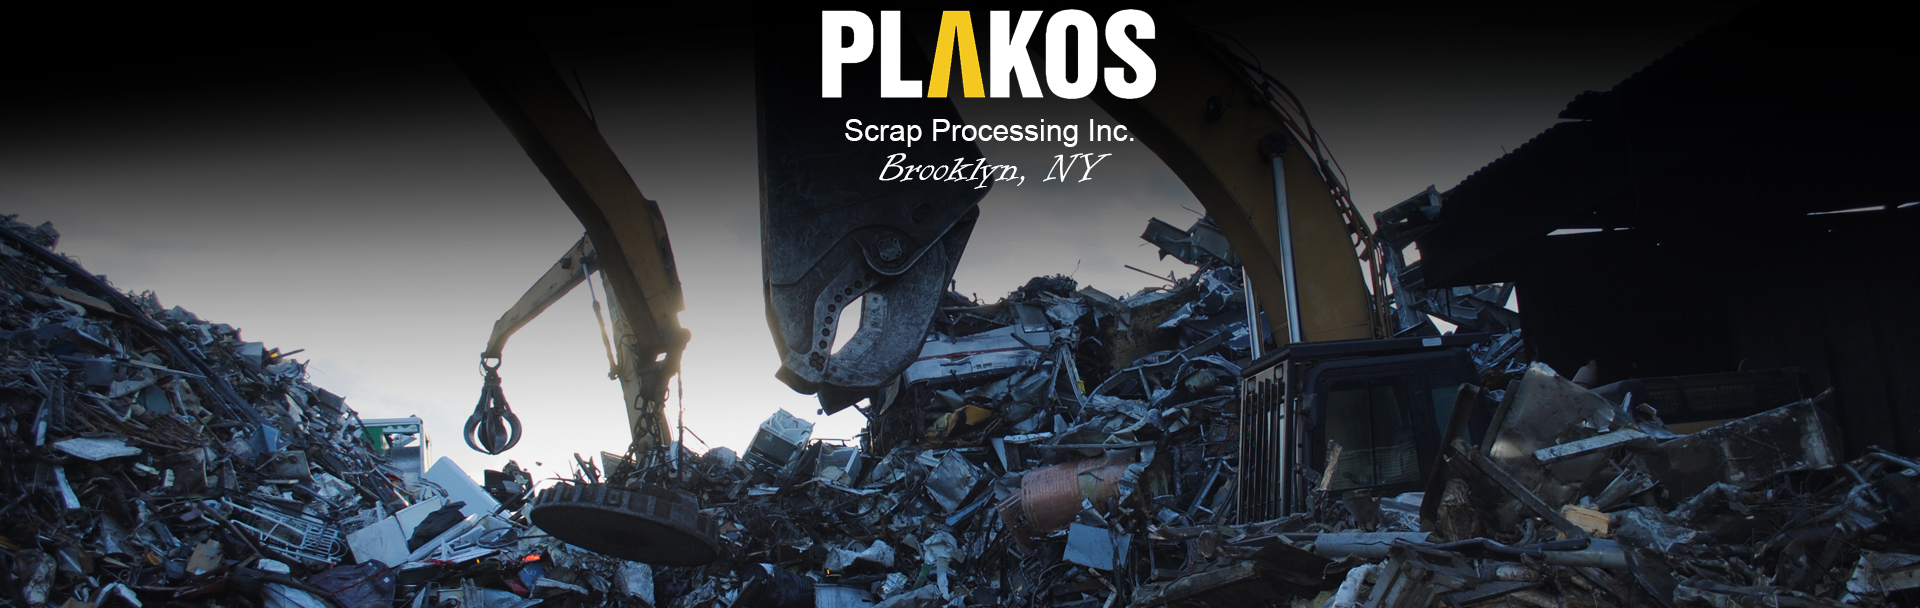 Plakos Scrap Processing Inc. image